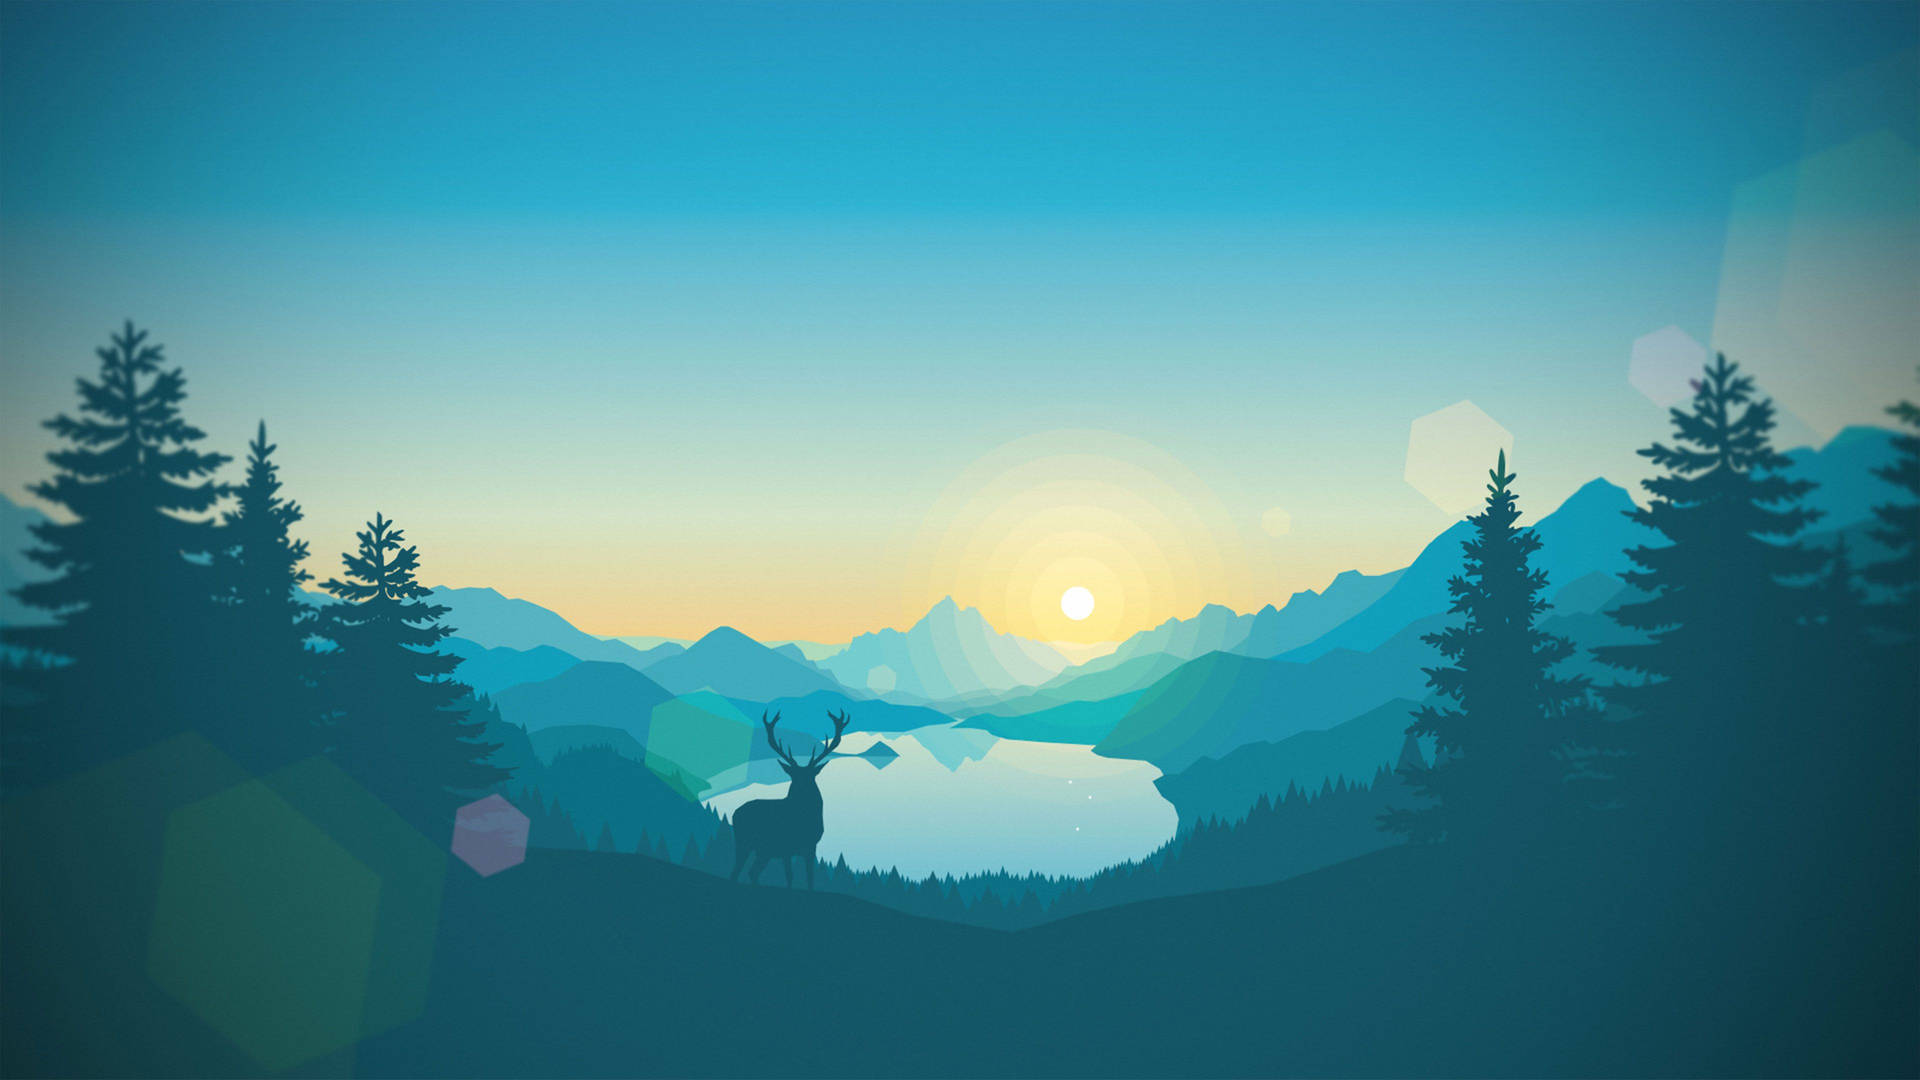 4k Firewatch Deer In Blue-green Forest Background